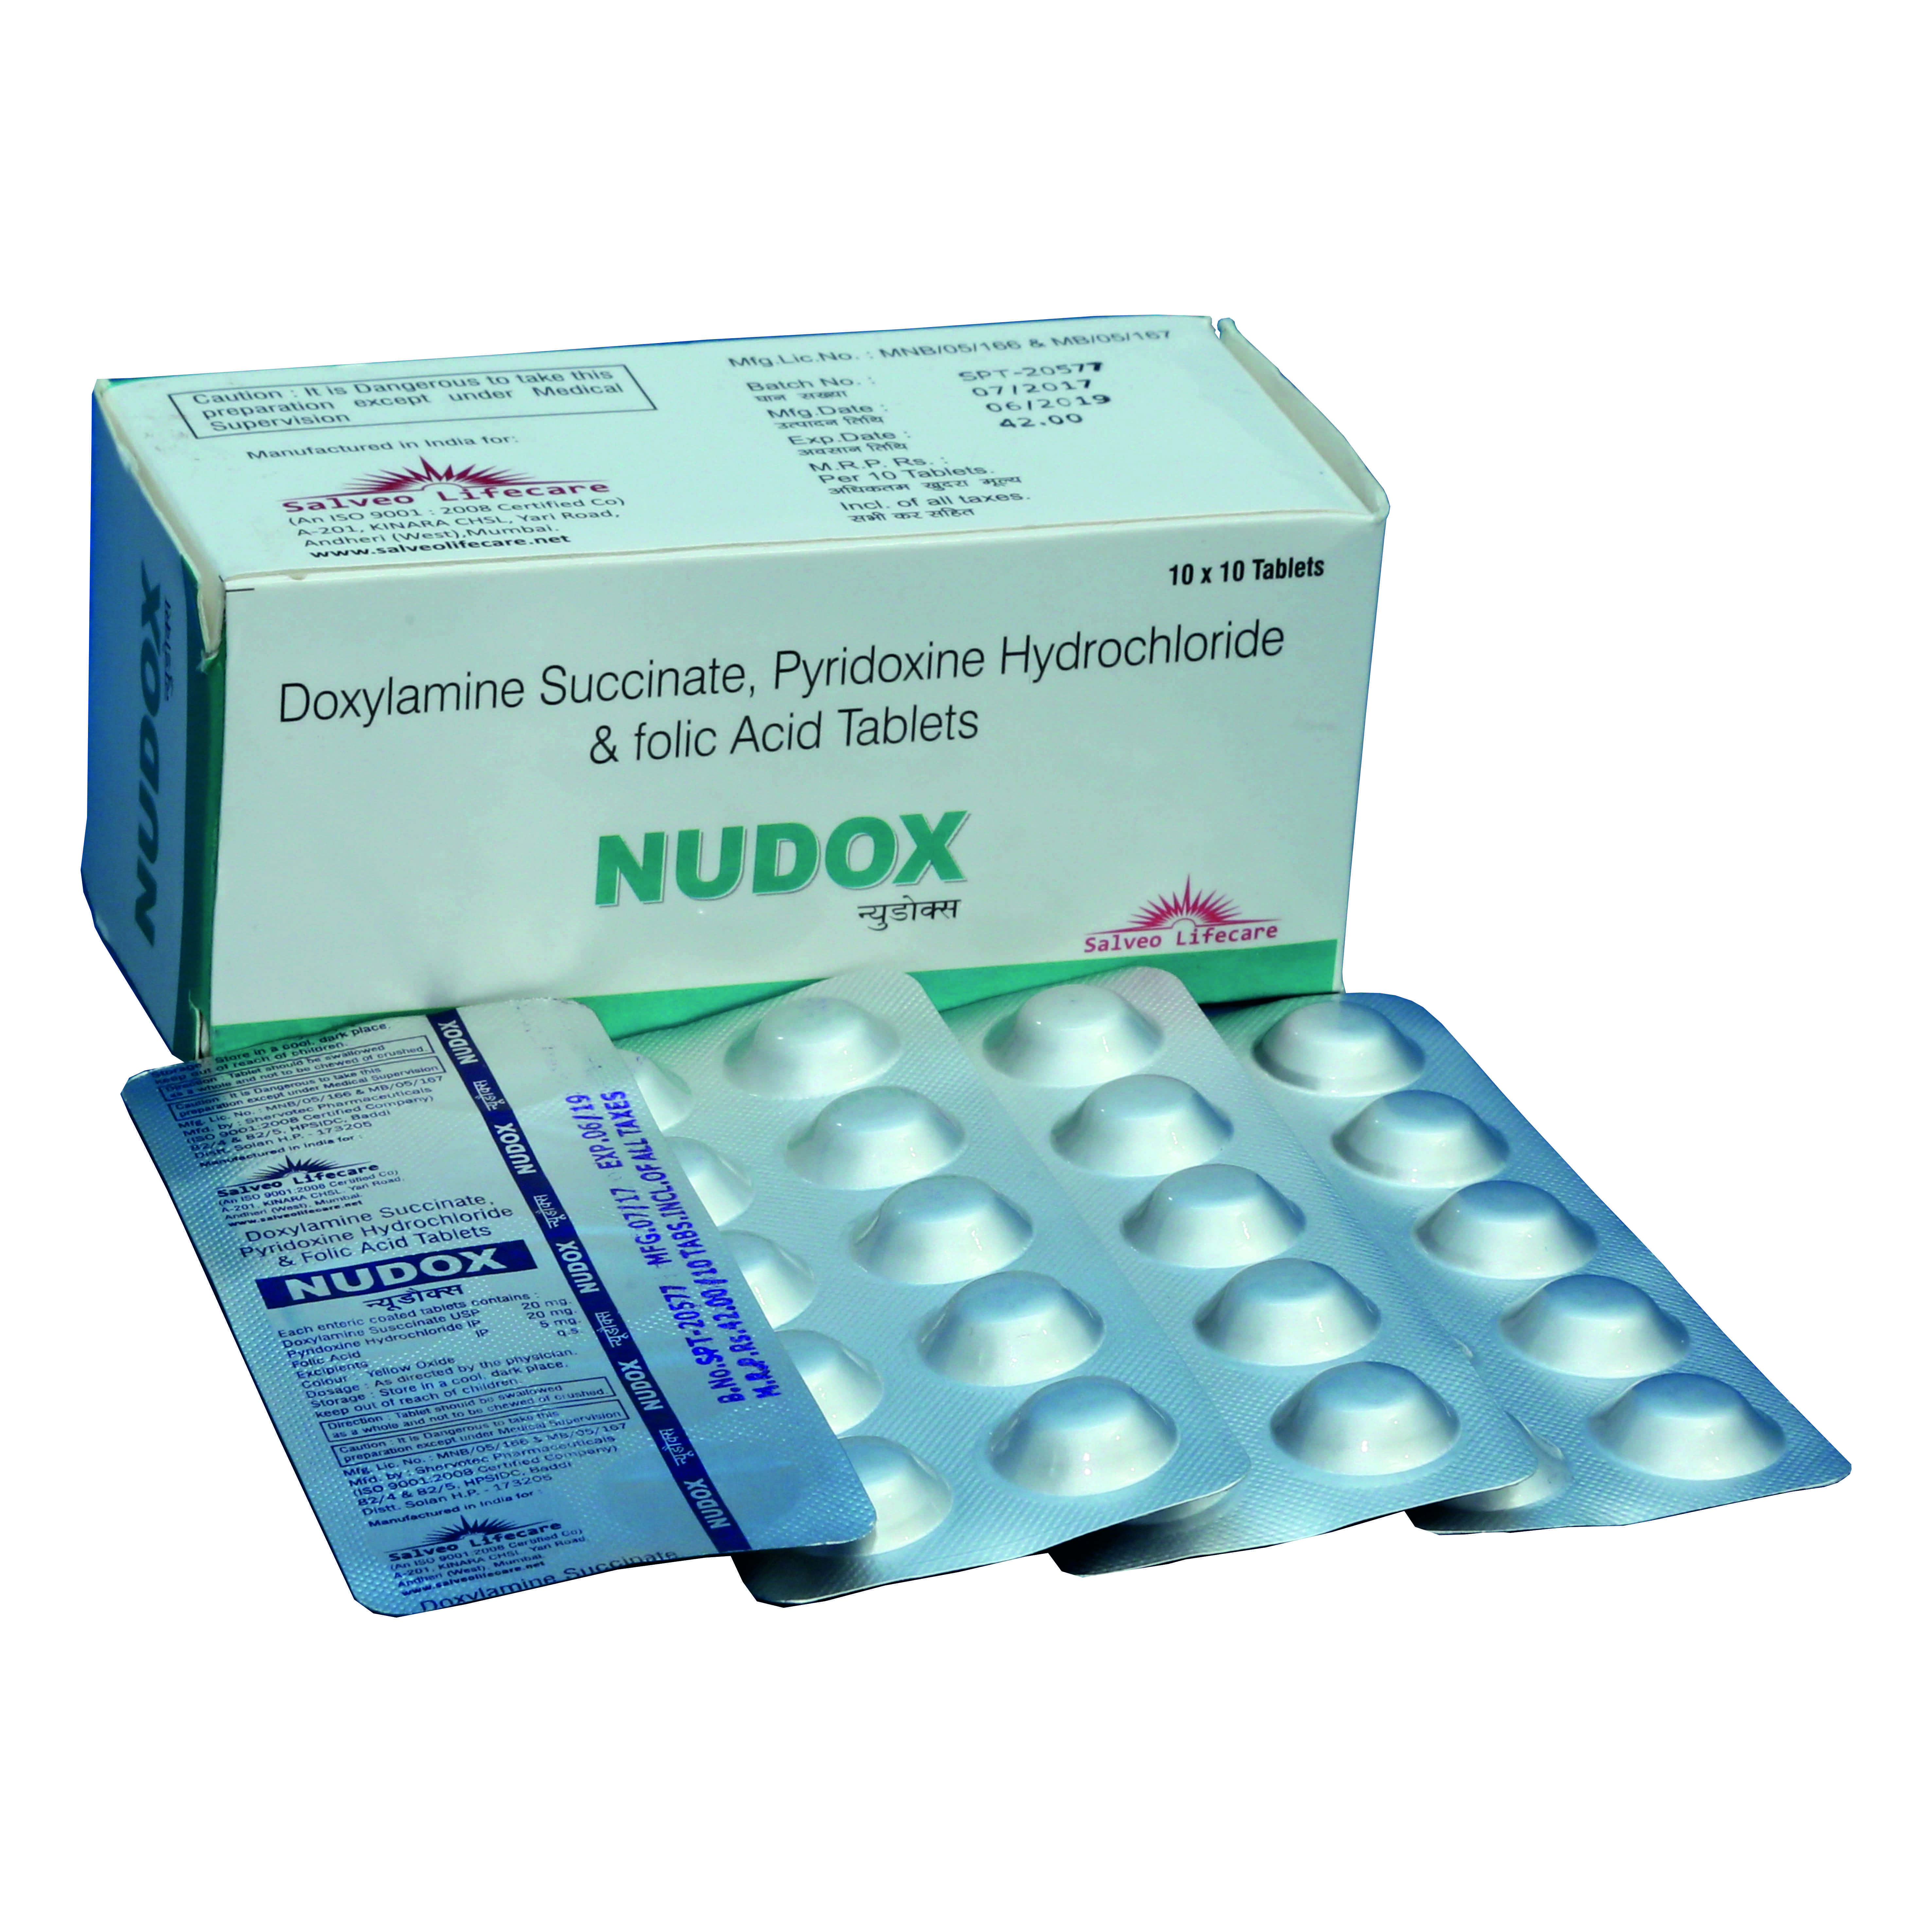 doxylamine succinate 20 mg, pyridoxine hydrochloride 20mg,folic acid 5mg